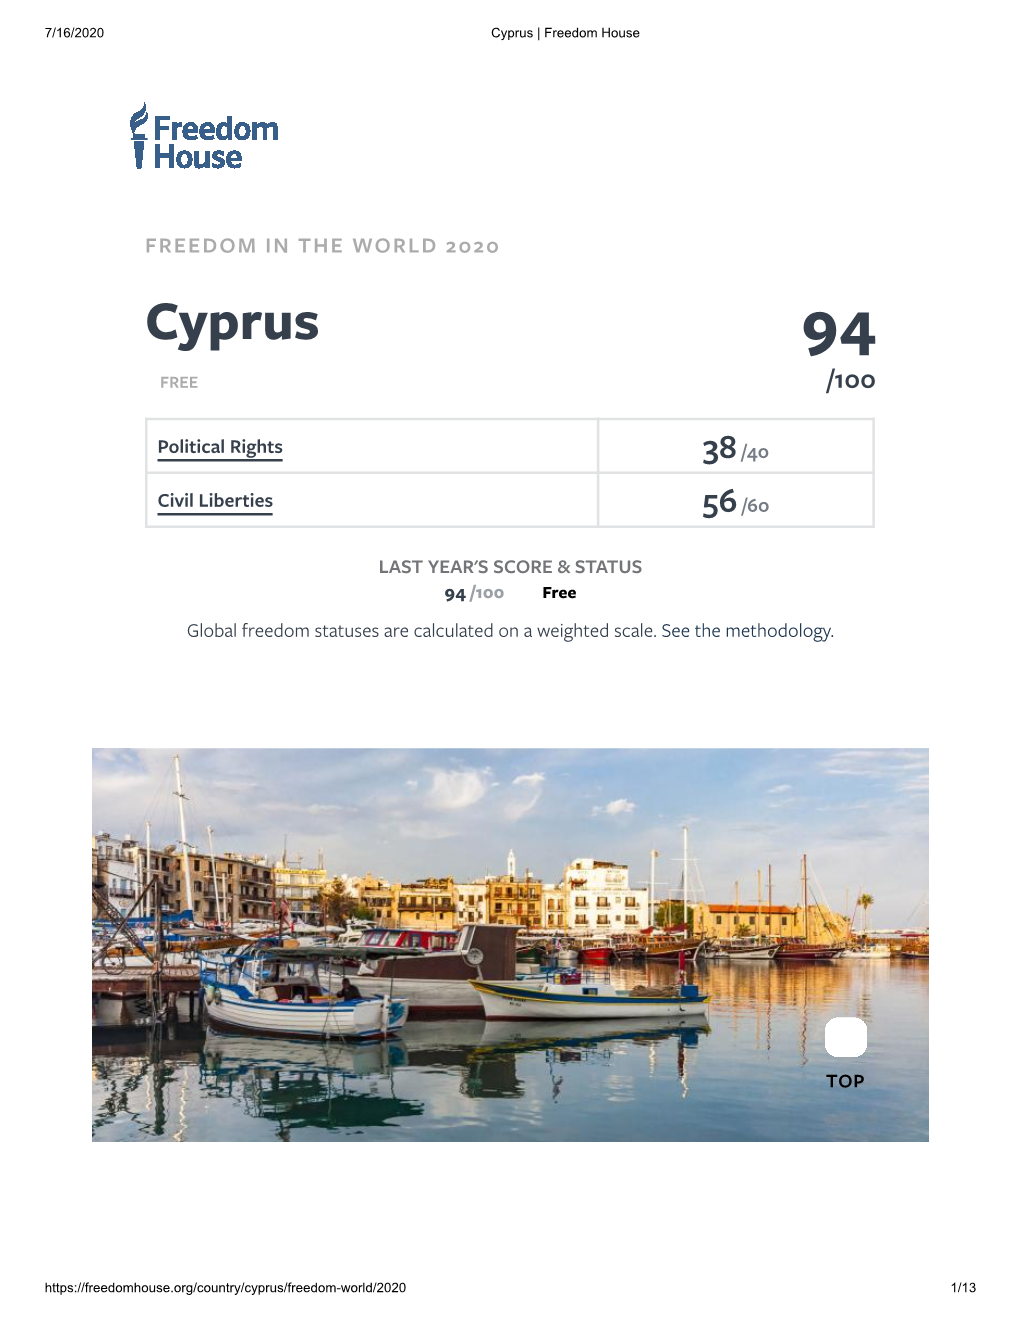 Cyprus | Freedom House